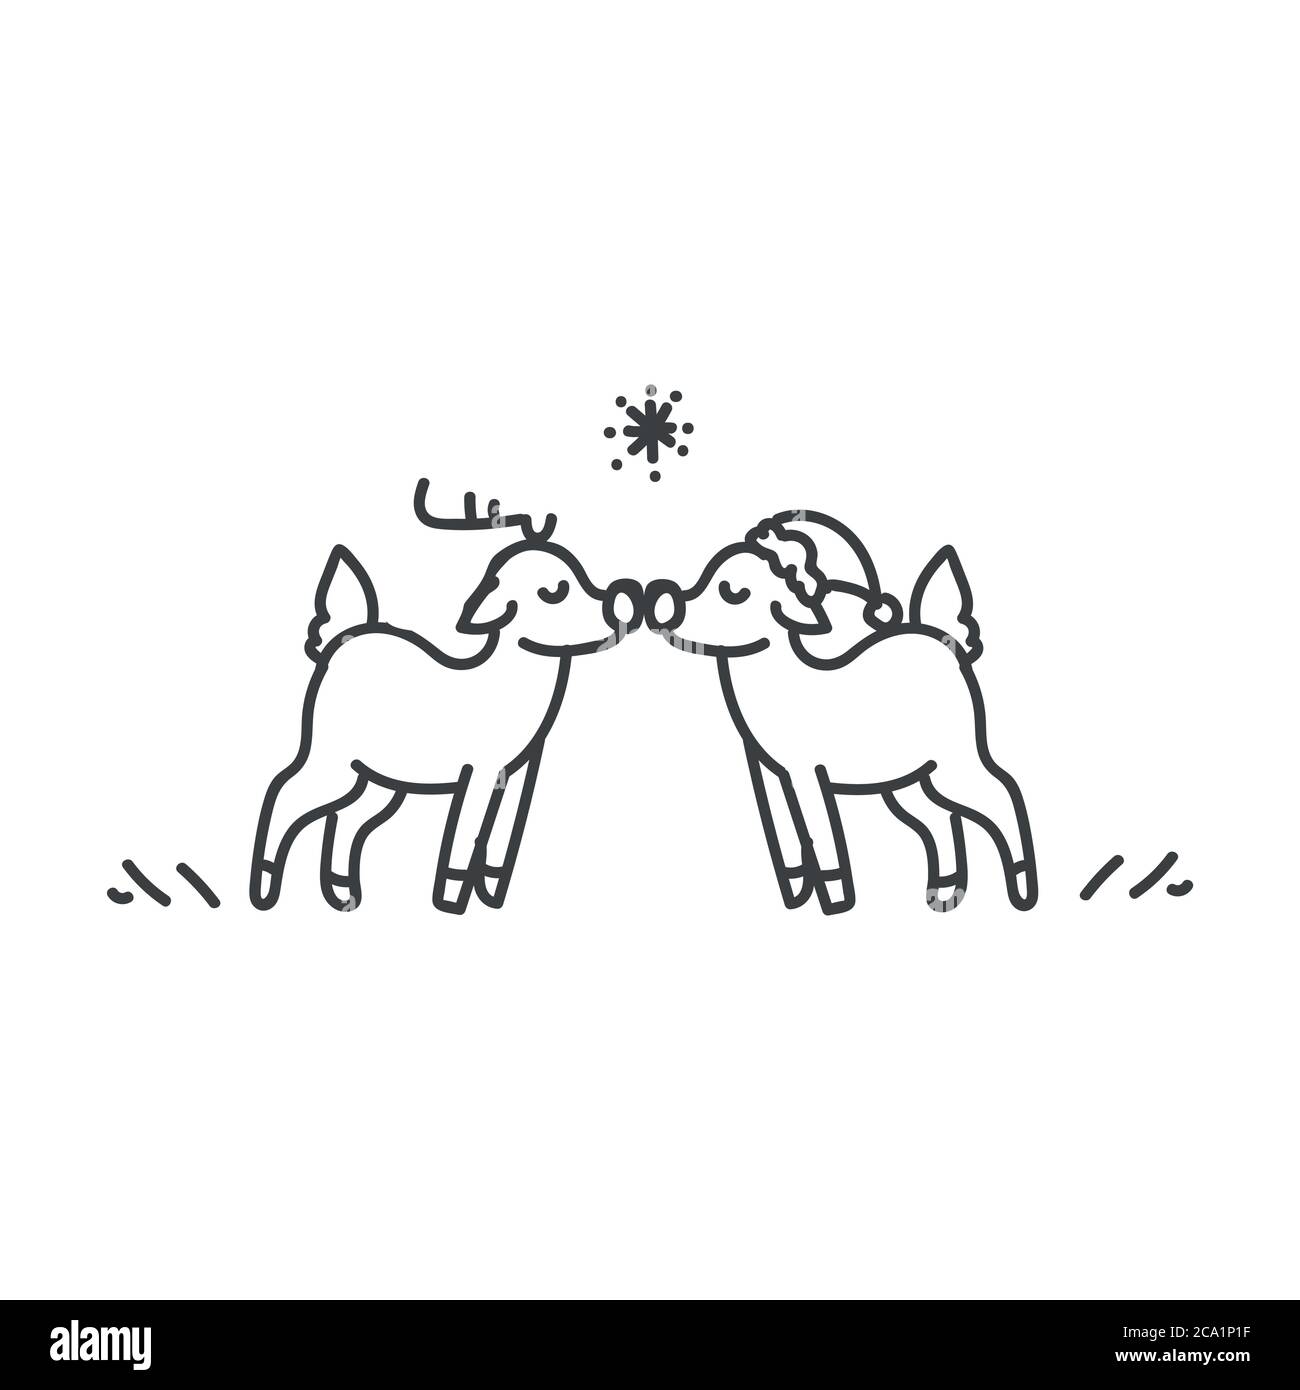 Seamless reindeer couple illustration clipart. Simple gender neutral  nursery festive scrapbook sticker. Kids whimsical cute hand drawn cartoon  Stock Vector Image & Art - Alamy